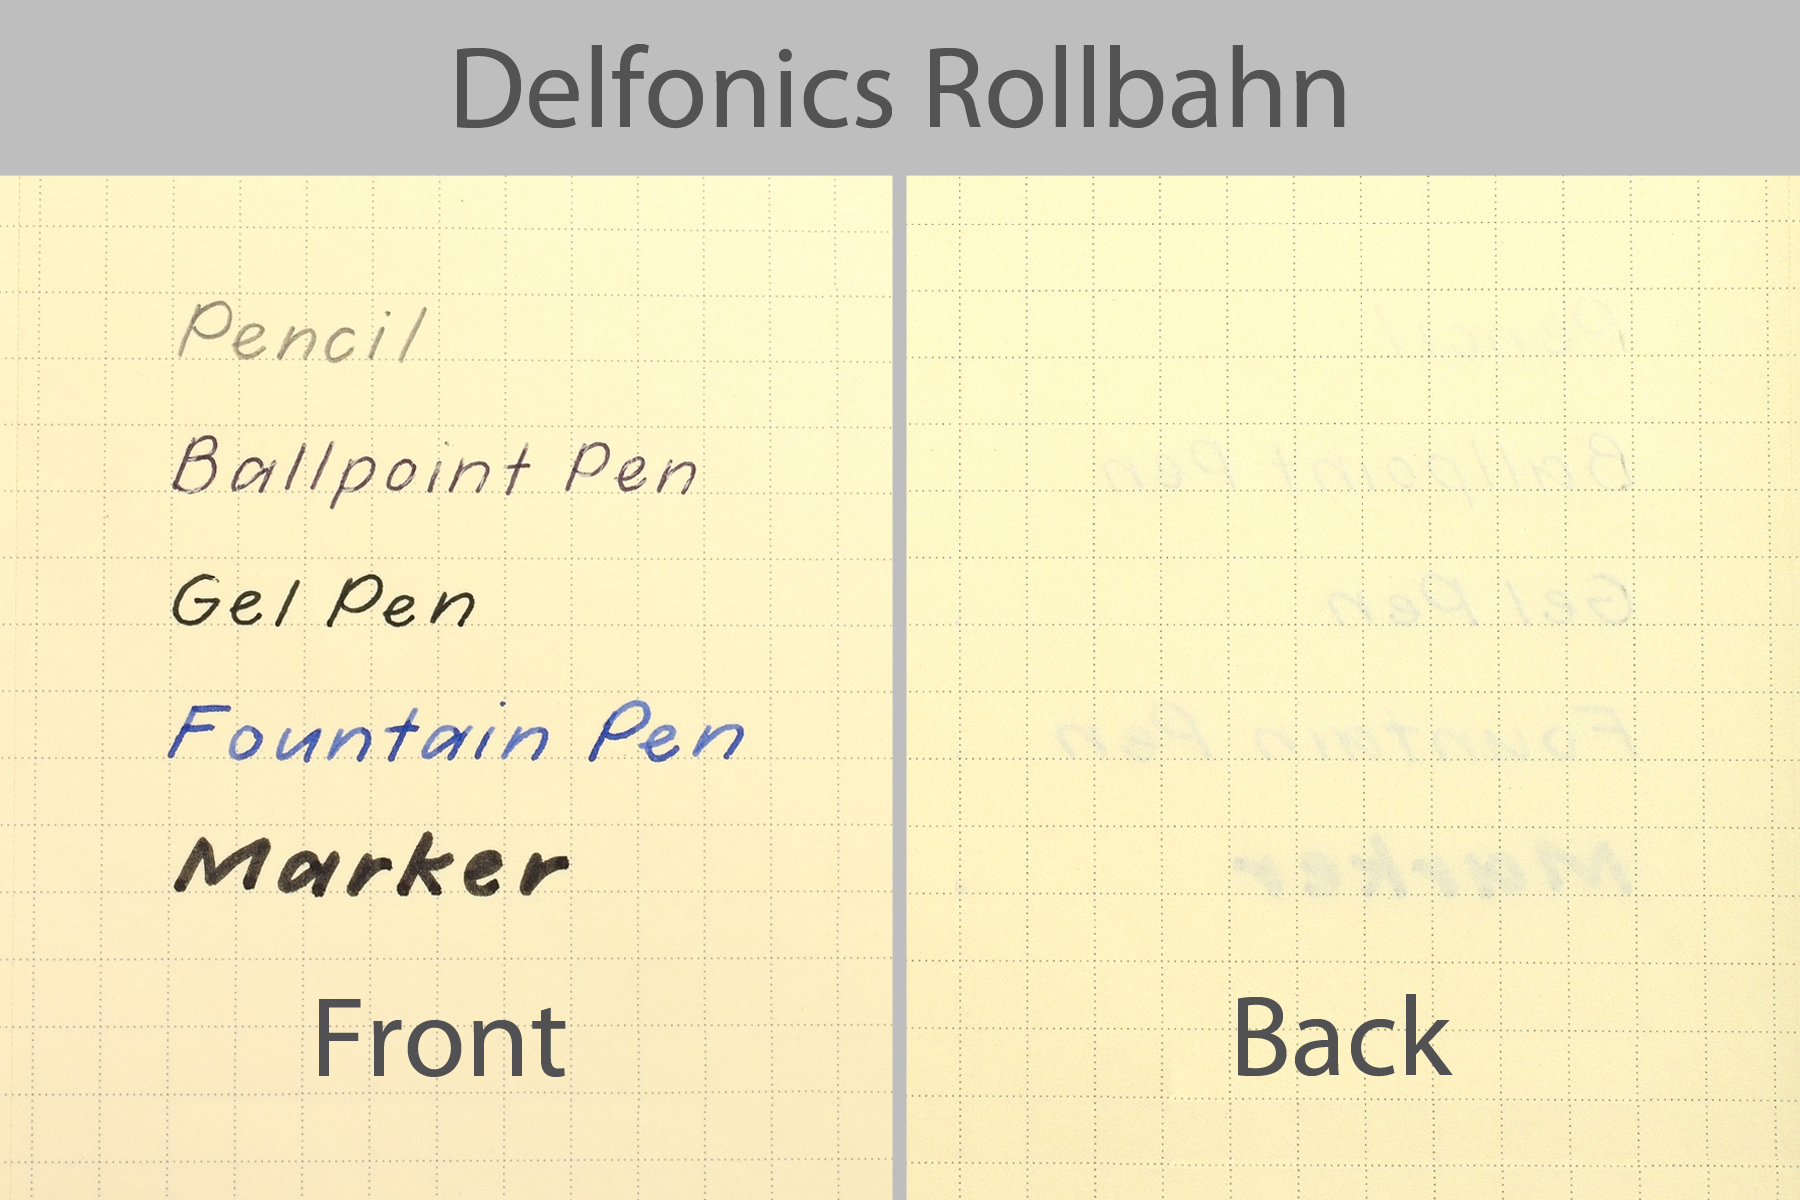 Delfonics Rollbahn writing sample.